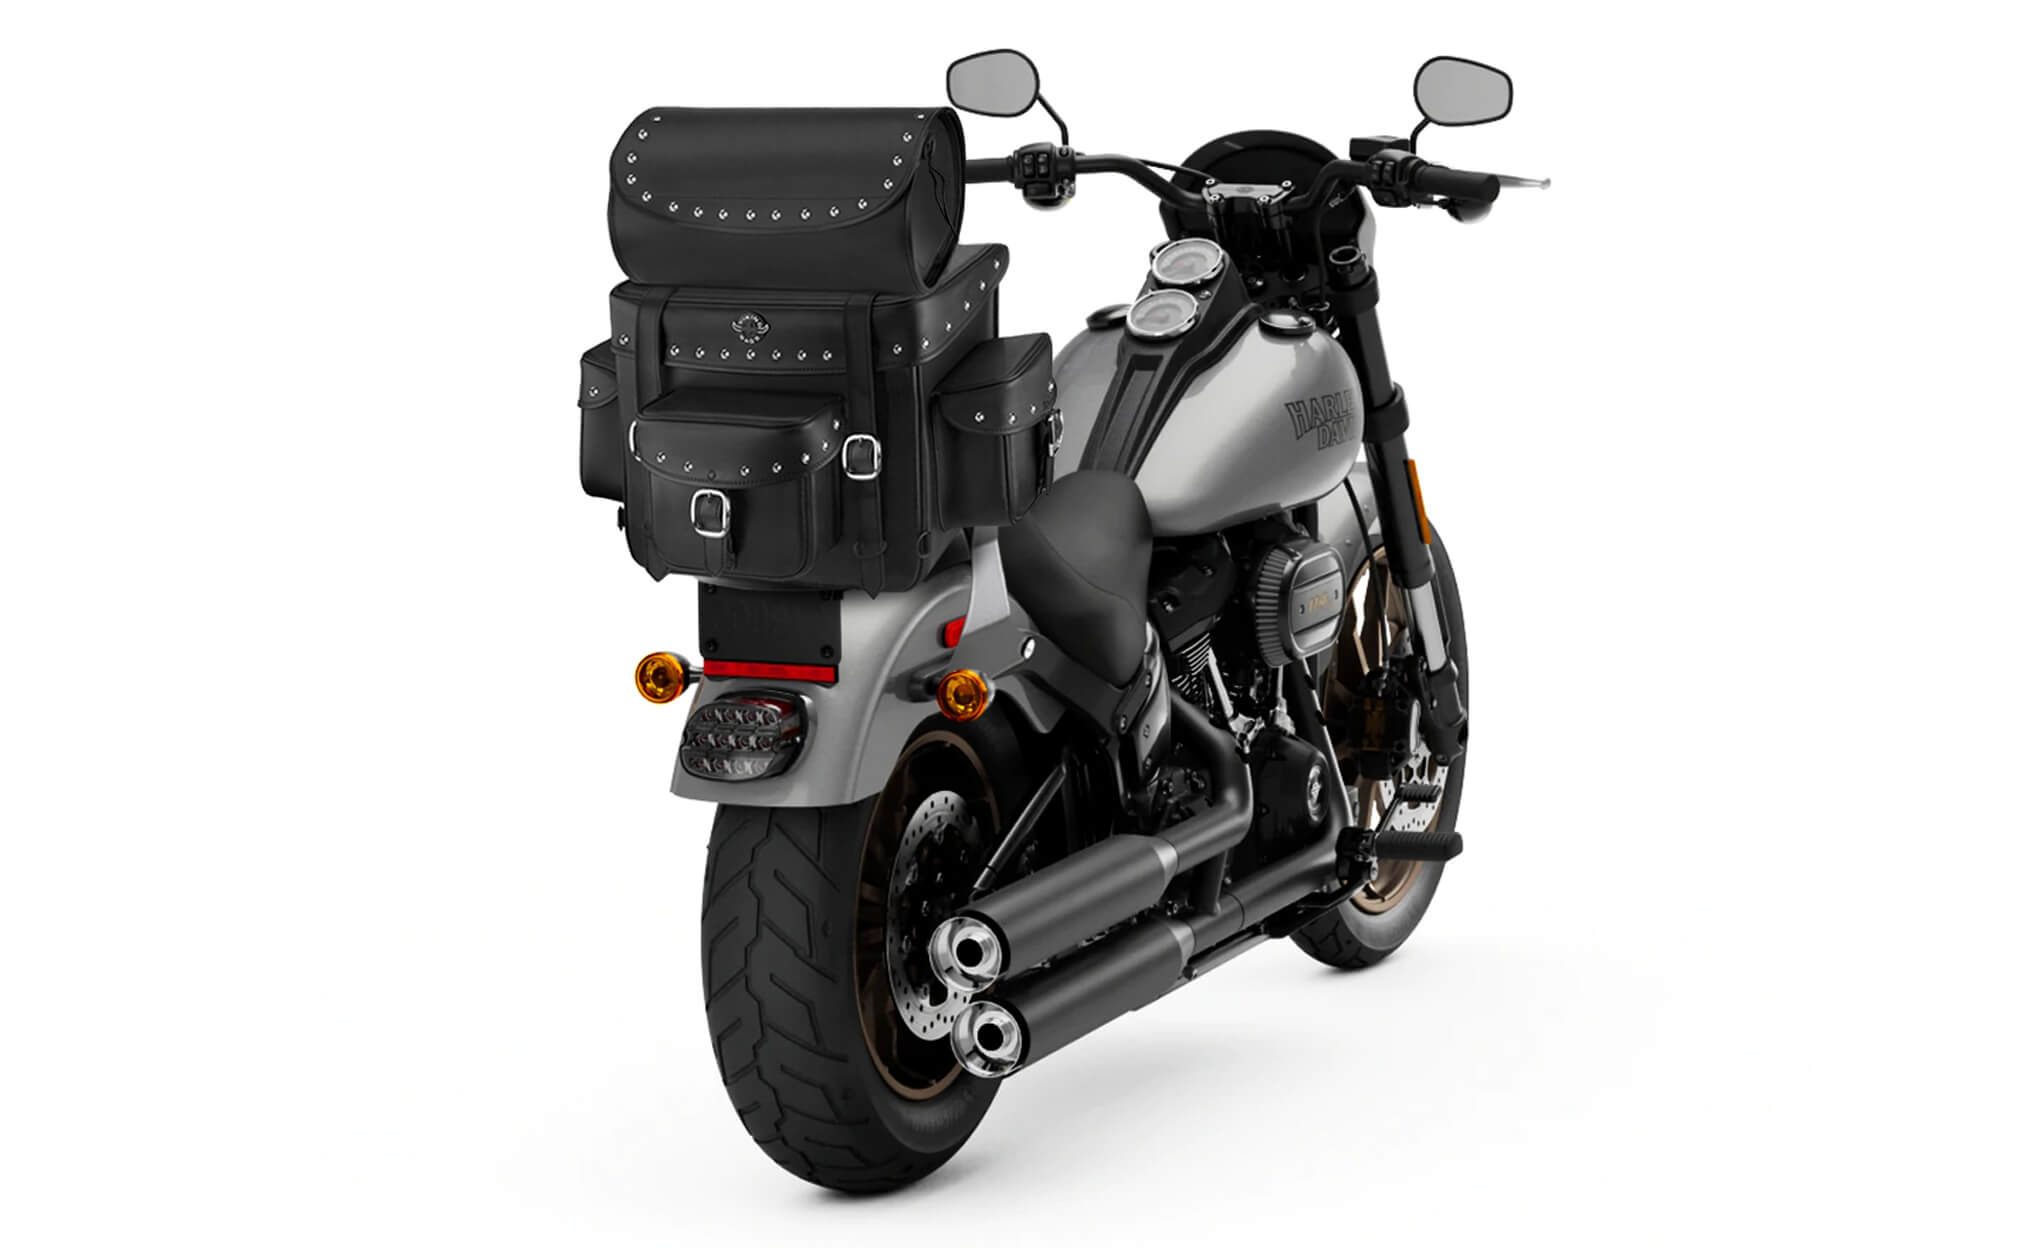 Viking Revival Series Large Honda Studded Motorcycle Sissy Bar Bag Bag on Bike View @expand